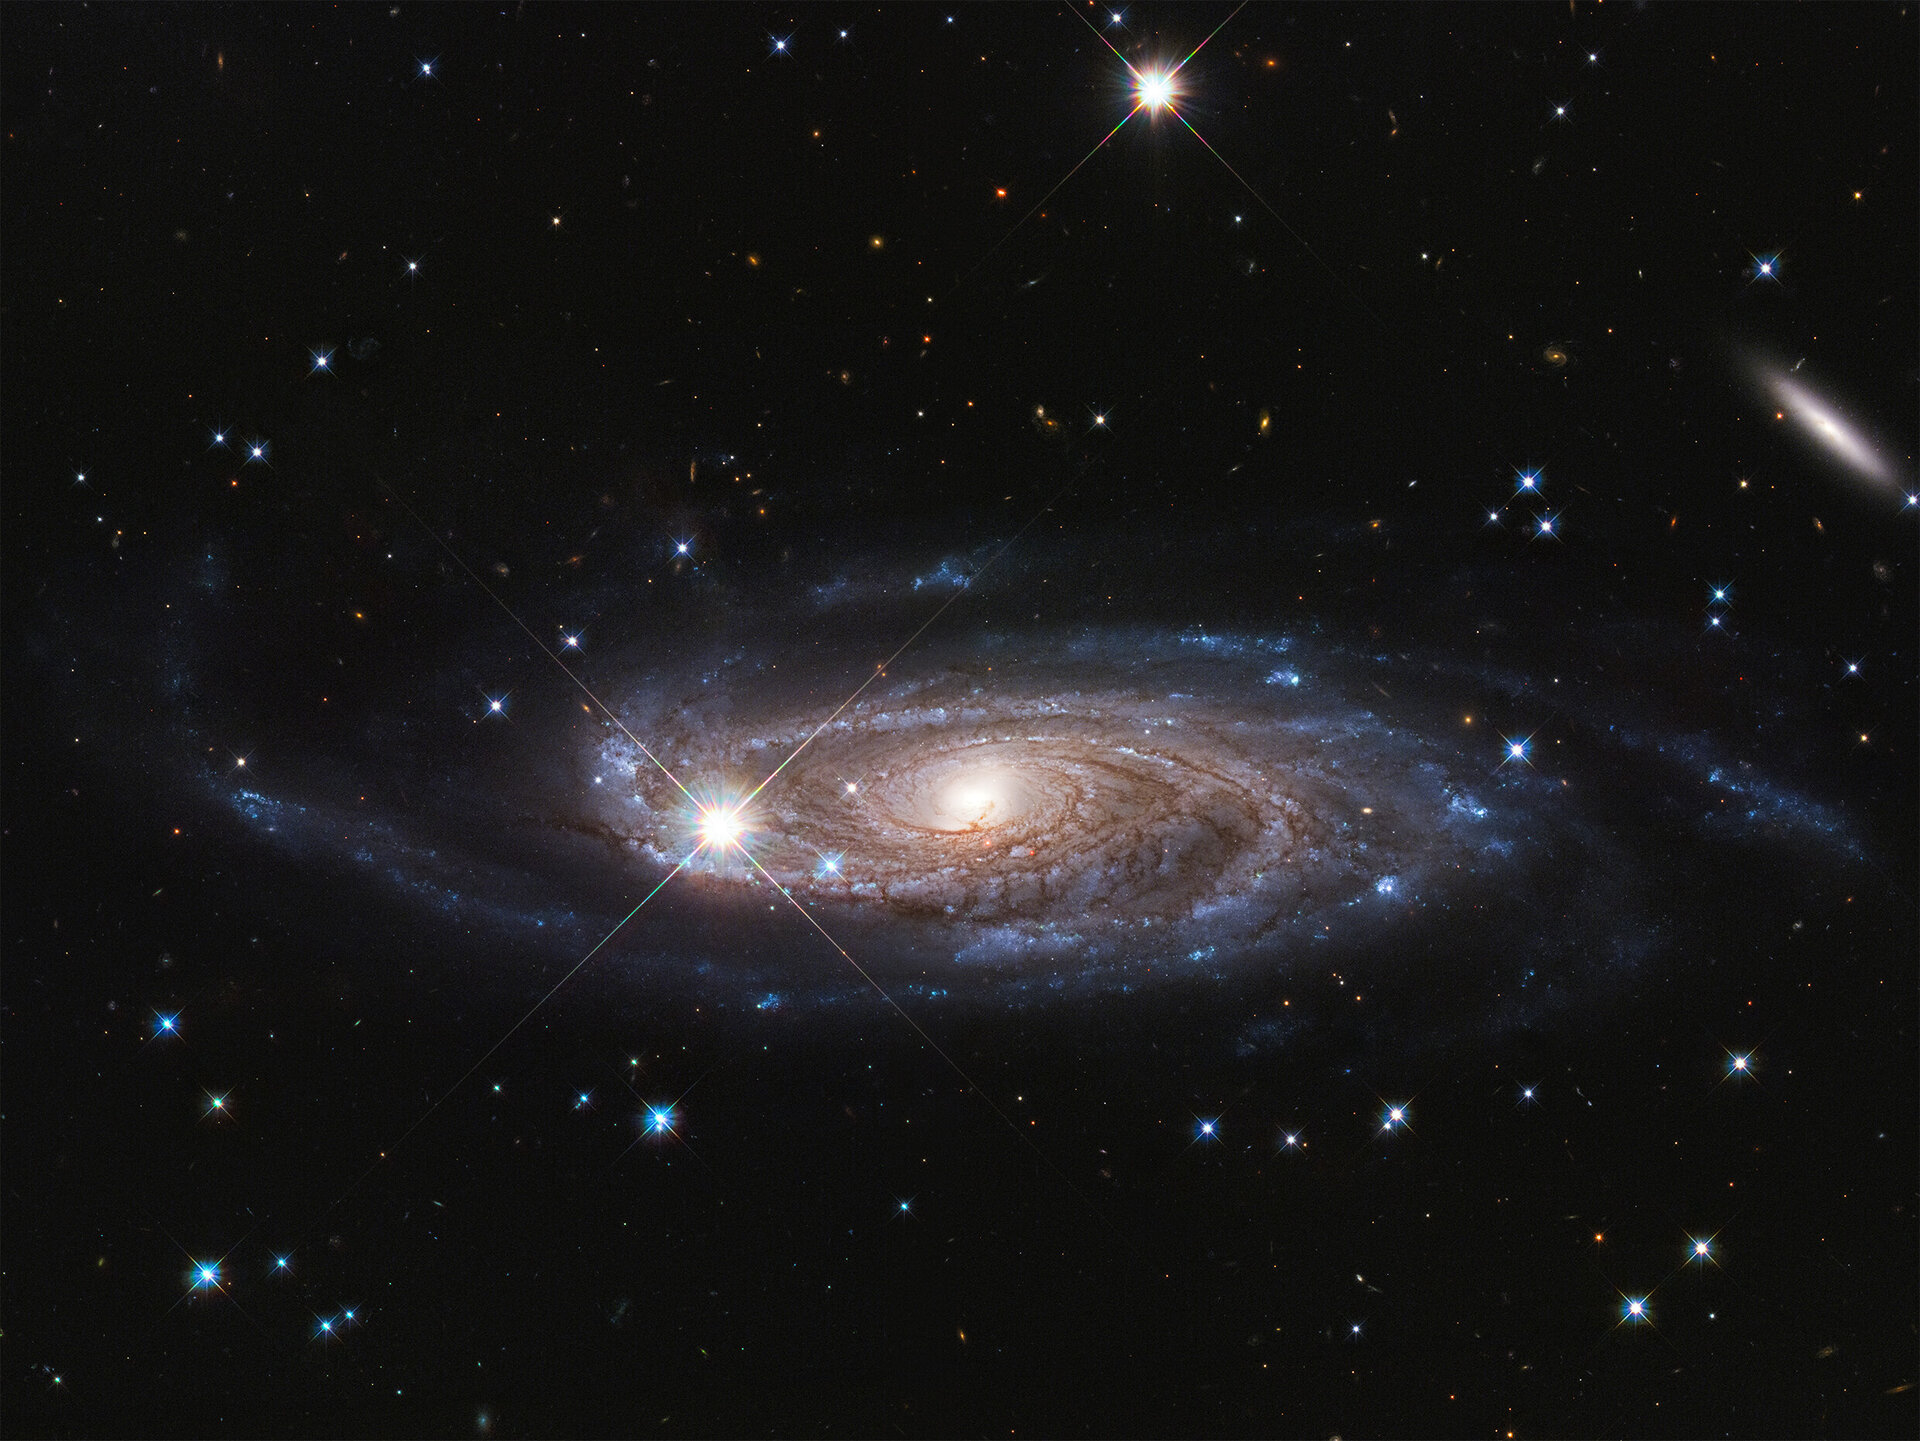 Hubble surveys gigantic galaxy